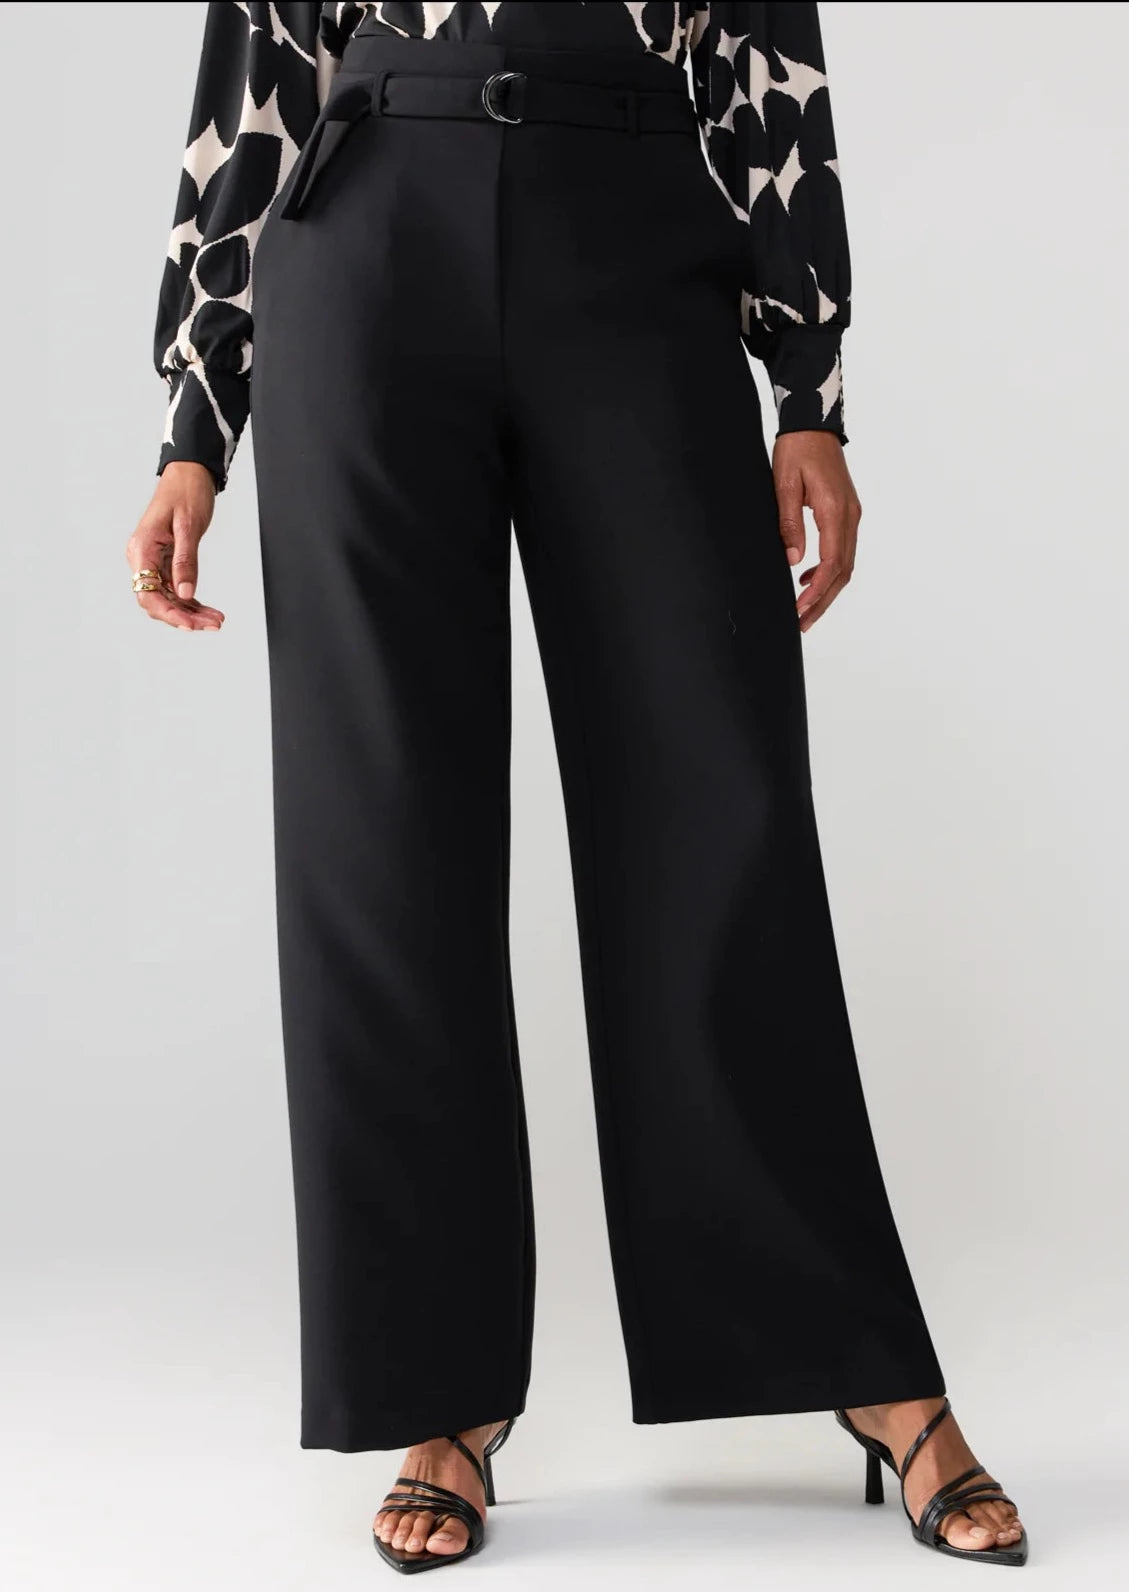 black high rise wide leg trouser pant with built in adjustable loop belt